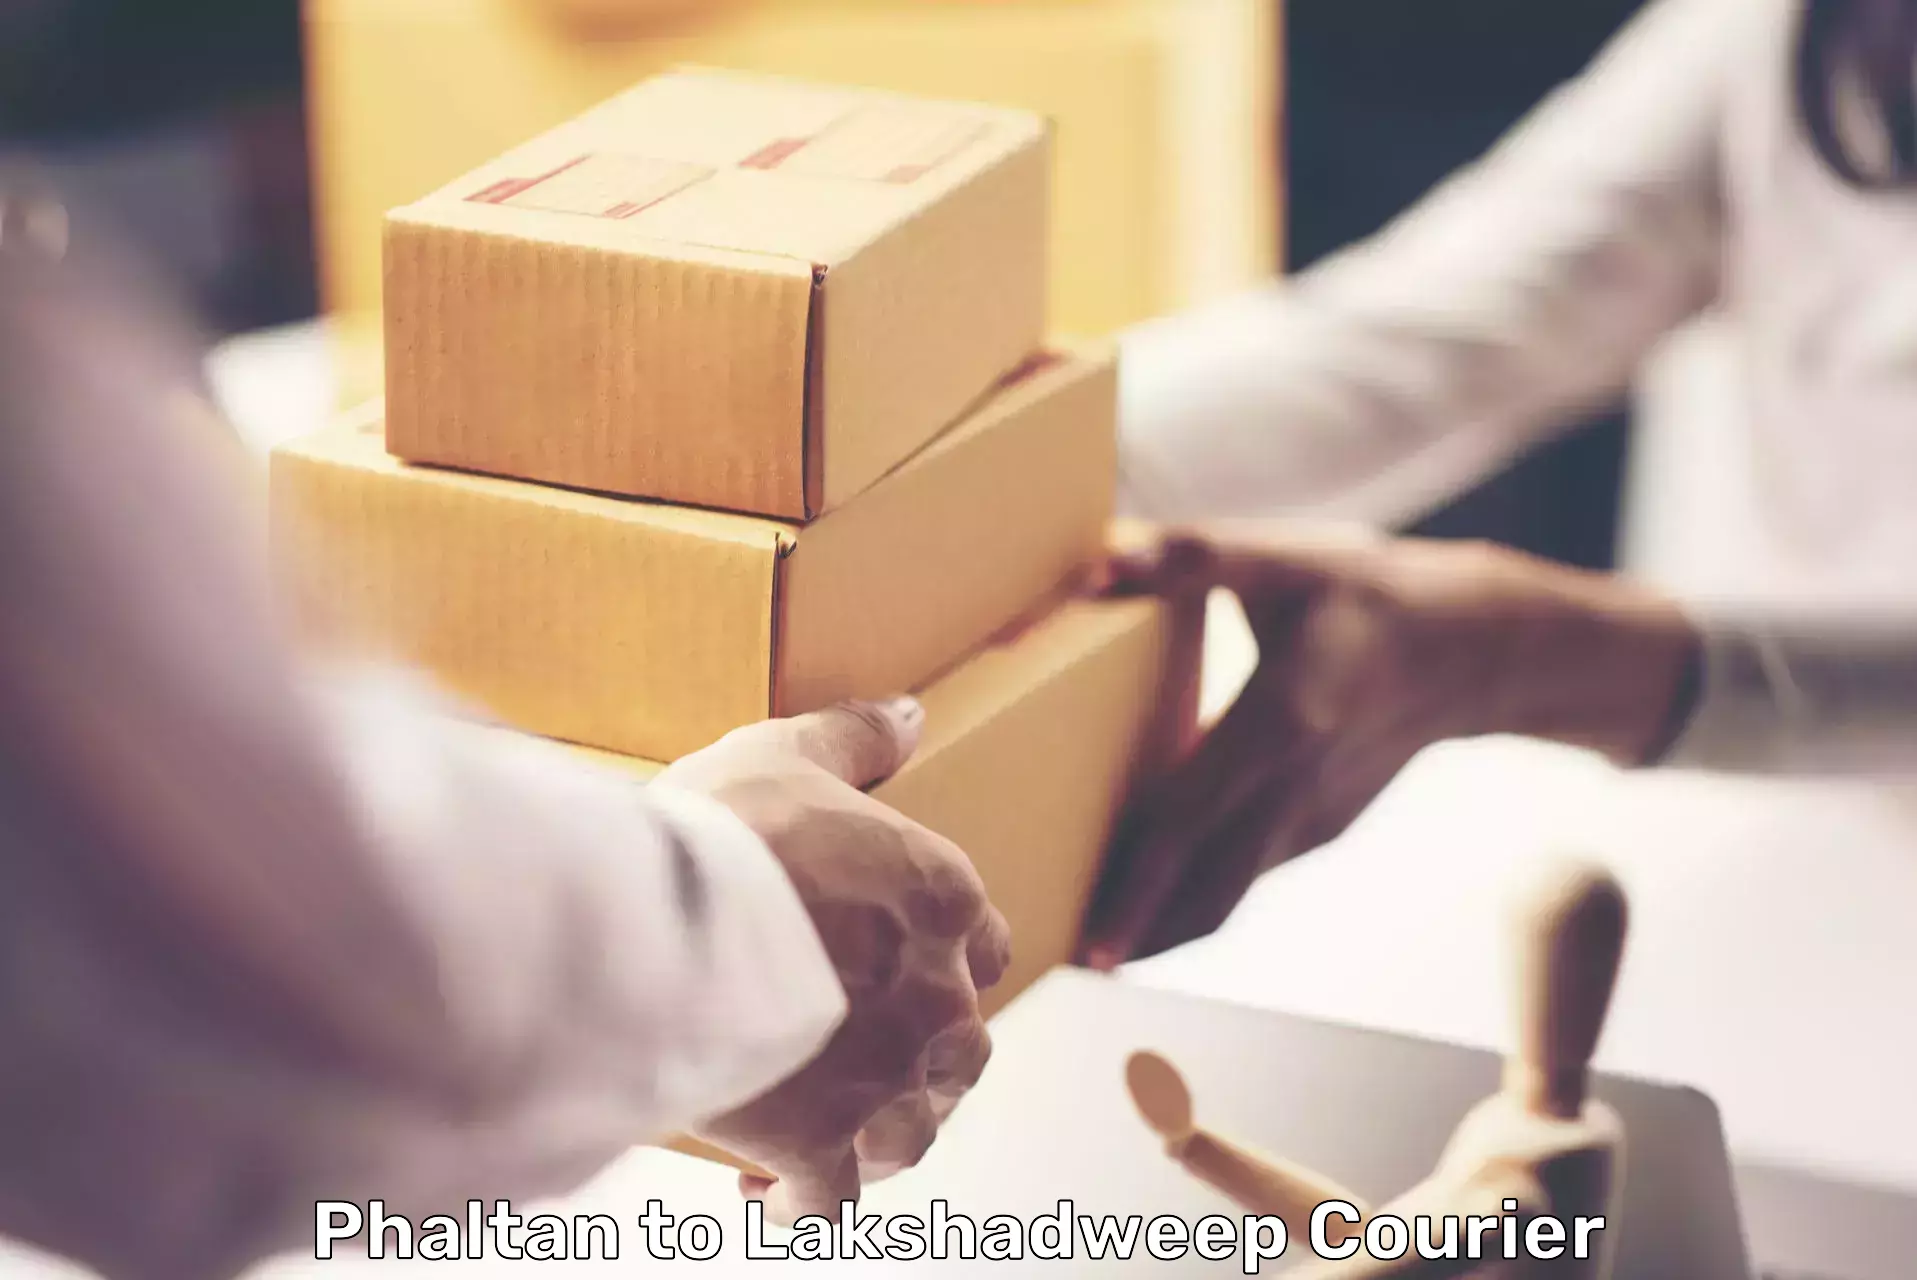 Global logistics network Phaltan to Lakshadweep